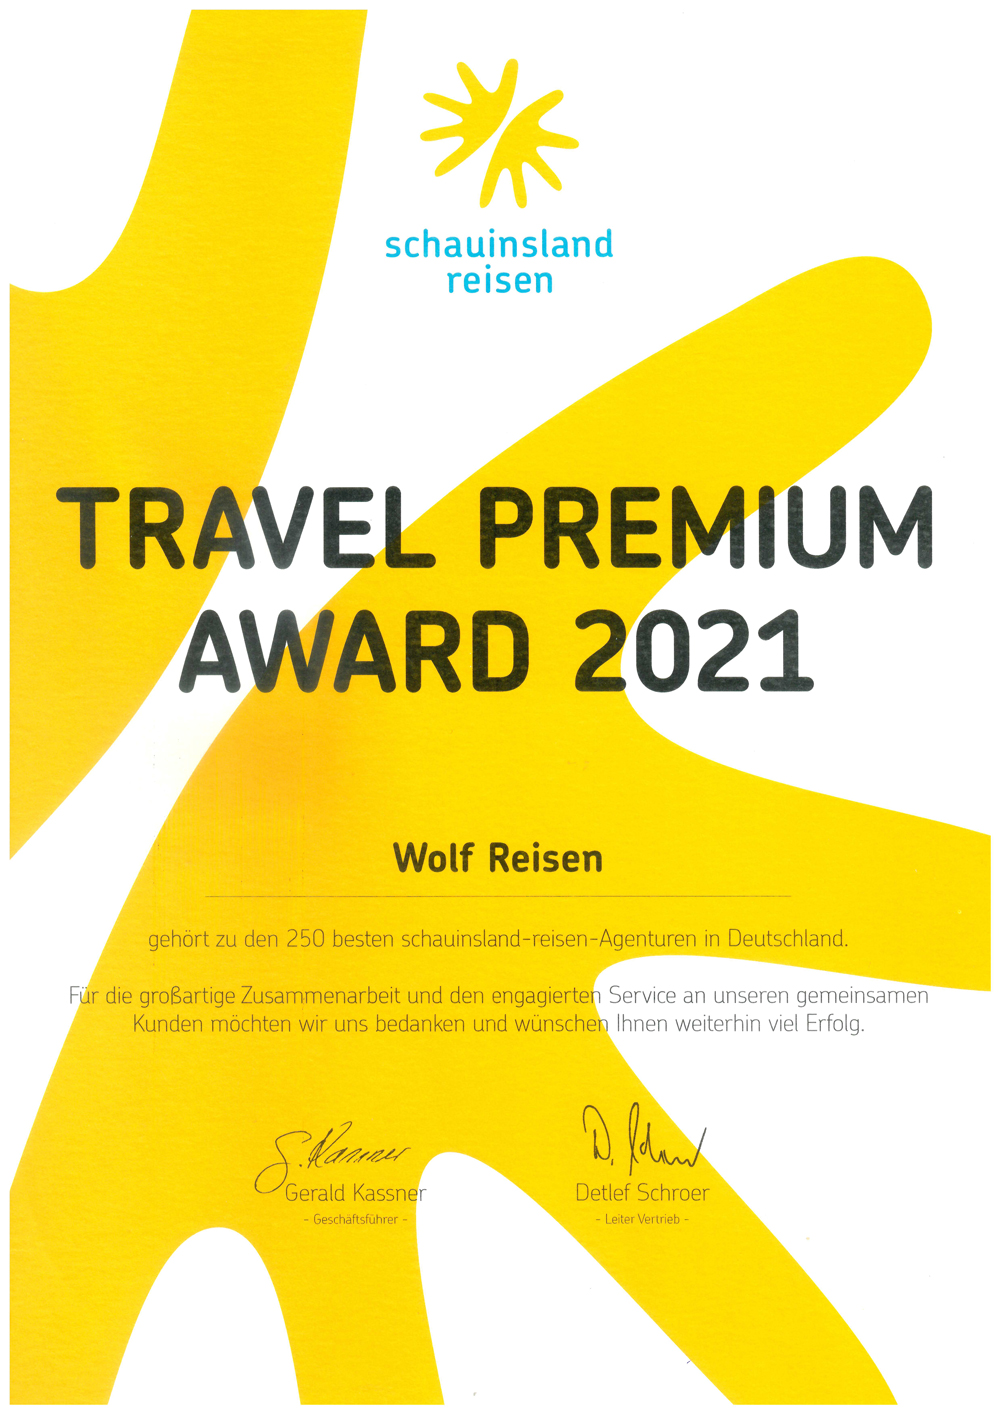 Travel Premium Award 2021